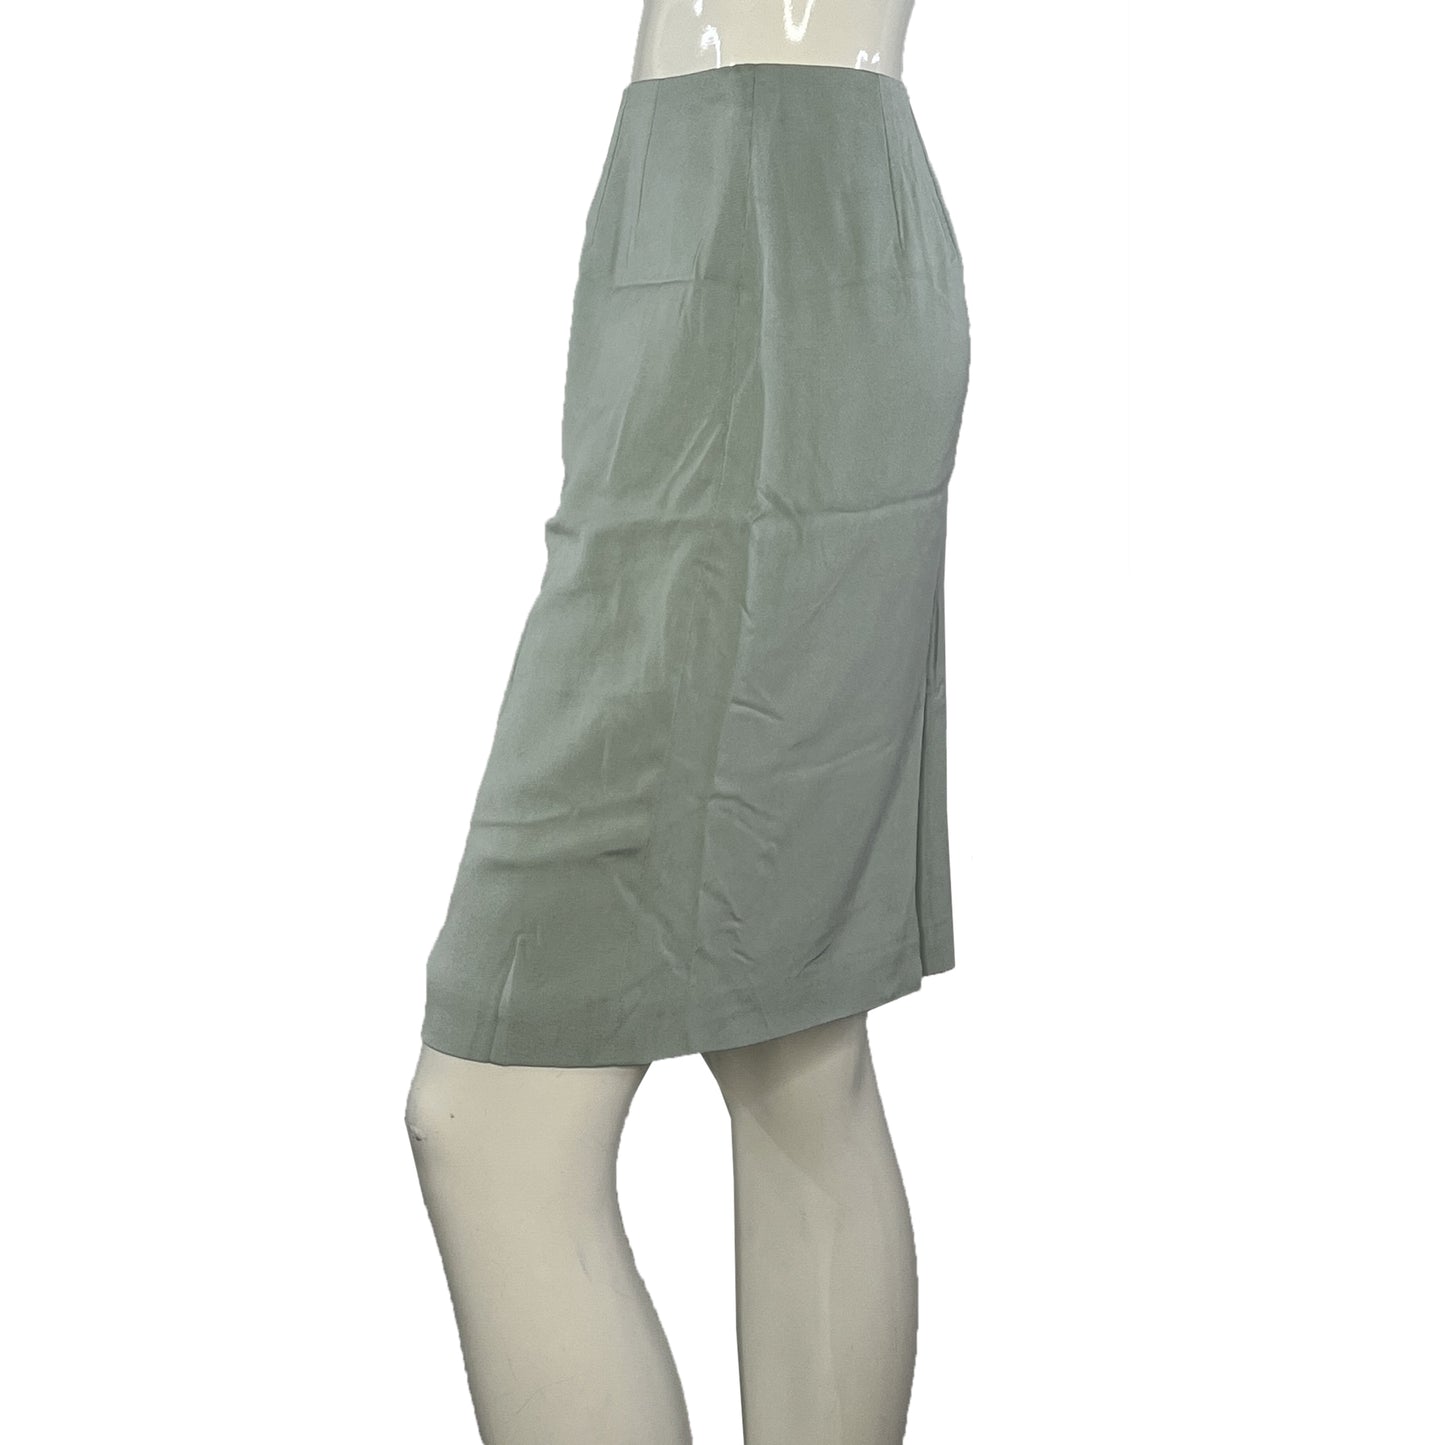 Talbots Skirt Above-Knee Mint Size 14 SKU 000417